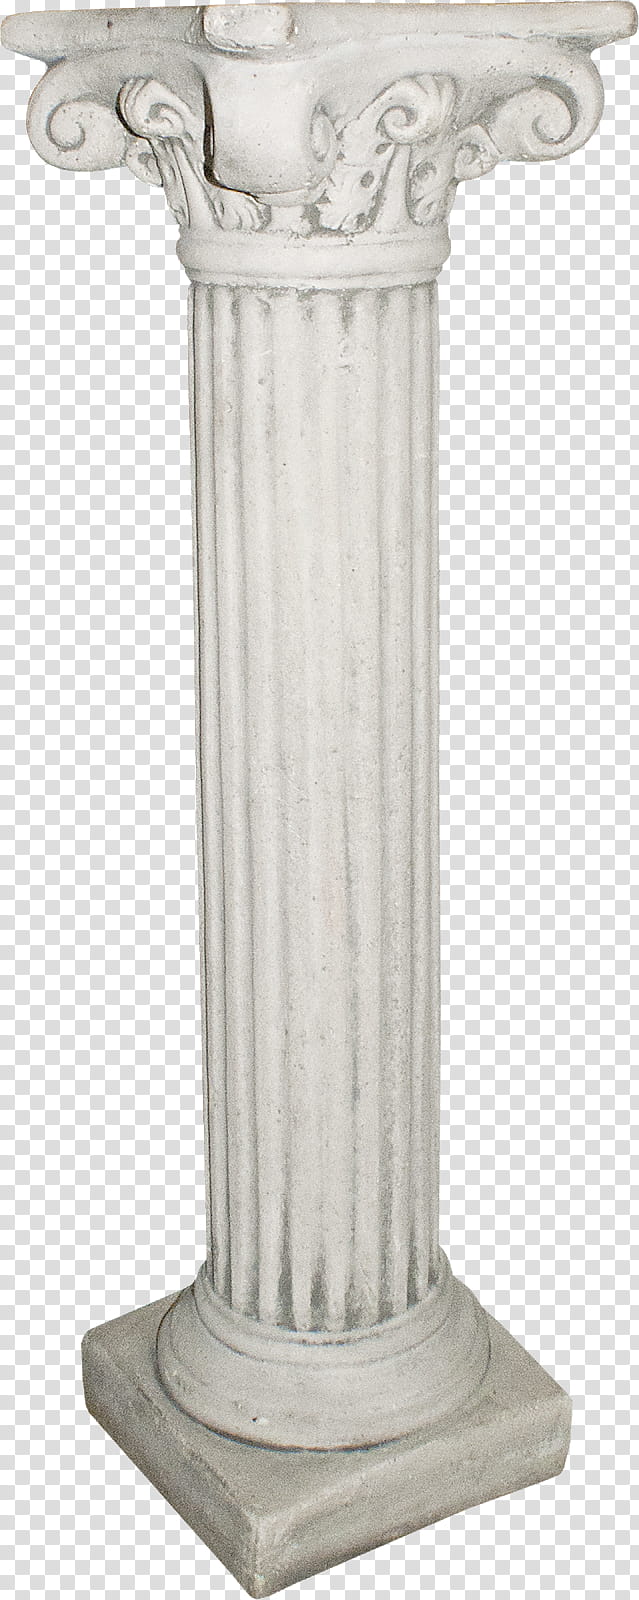 Column Column, Architecture, Blog, Classical Order, Pier, Cylinder, Beige, Floor transparent background PNG clipart